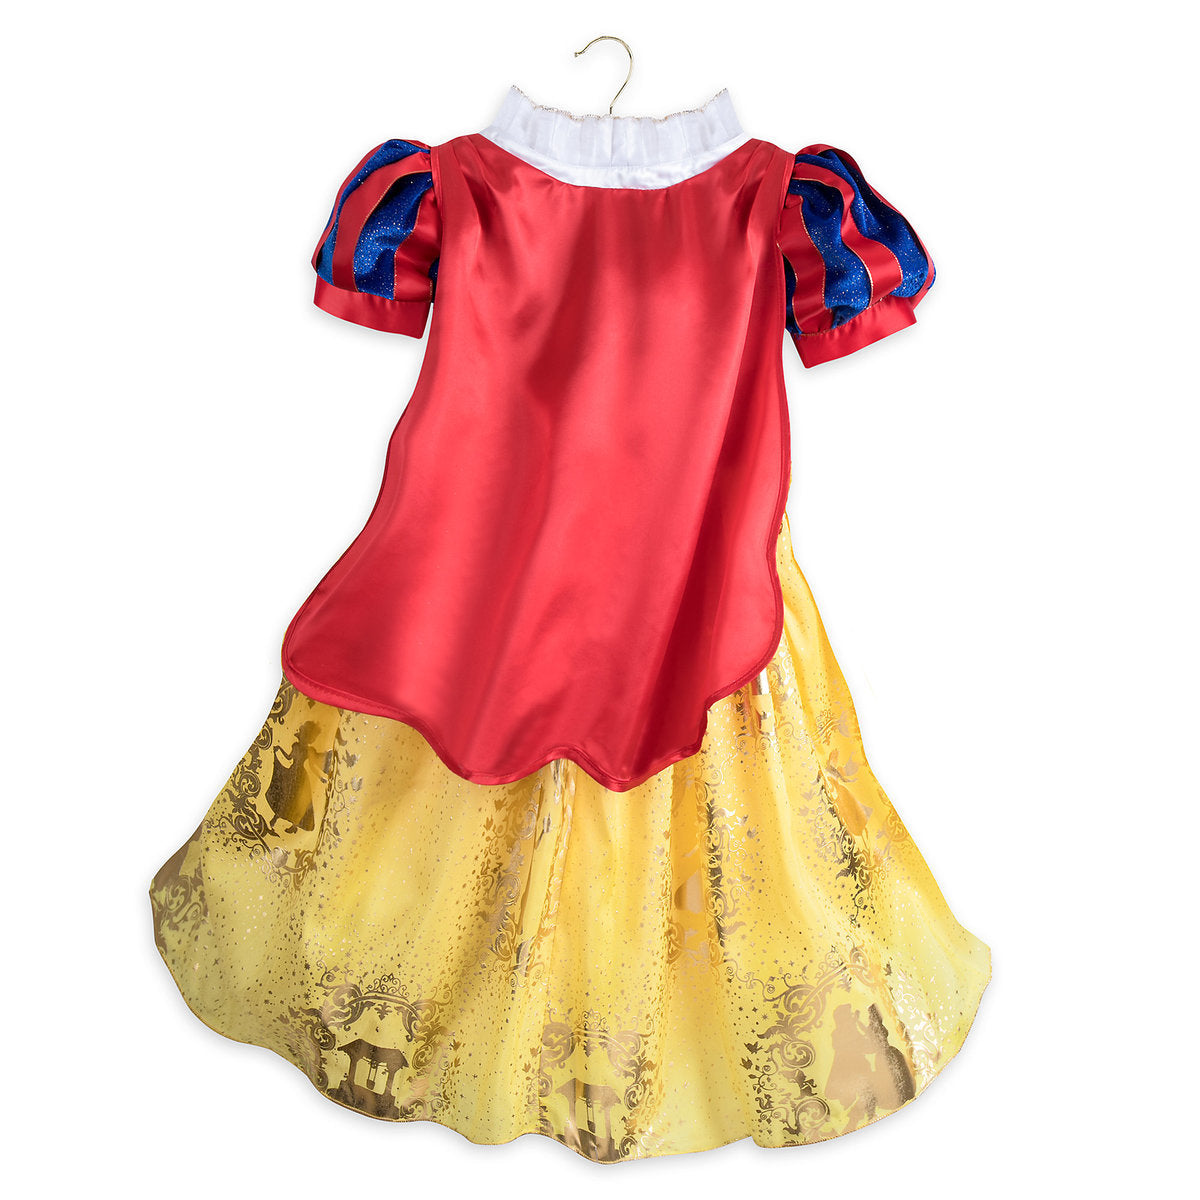 Snow White Costume for Kids